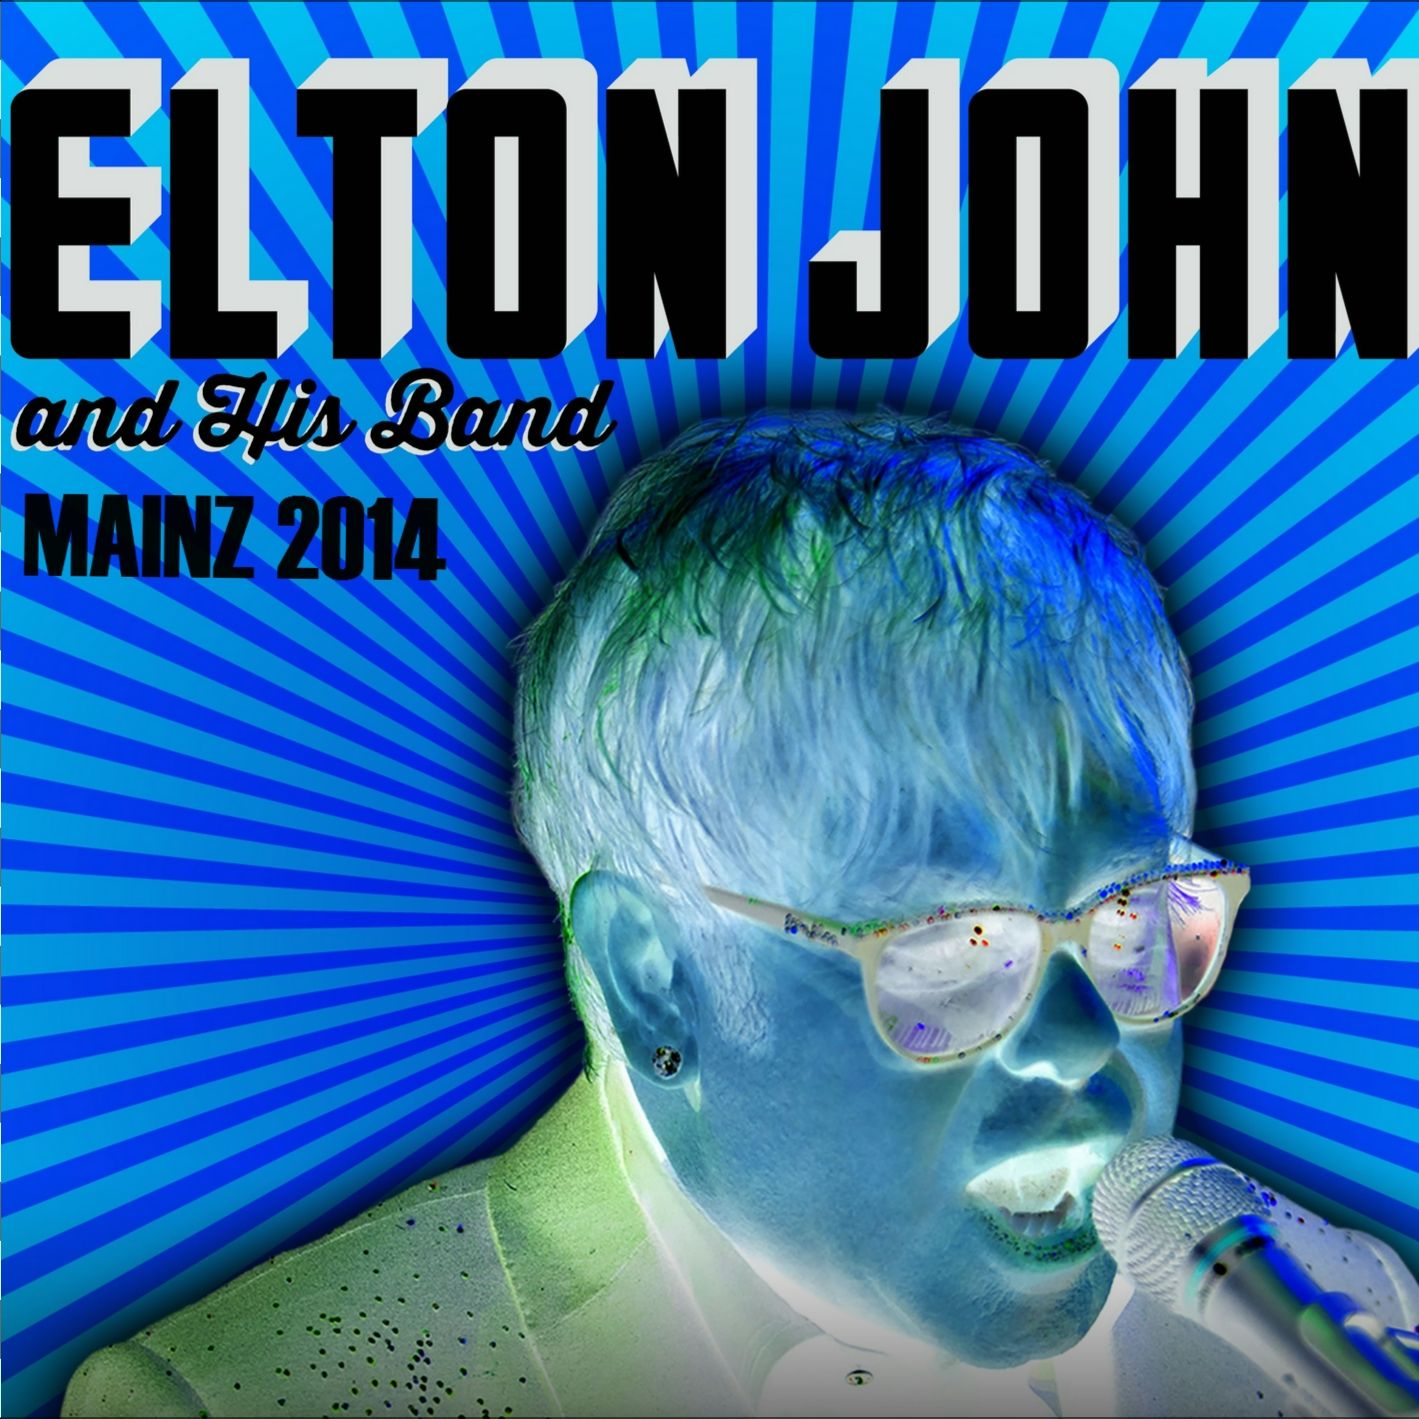 EltonJohn2014-07-19NordmoleMainzGermany (1).jpg